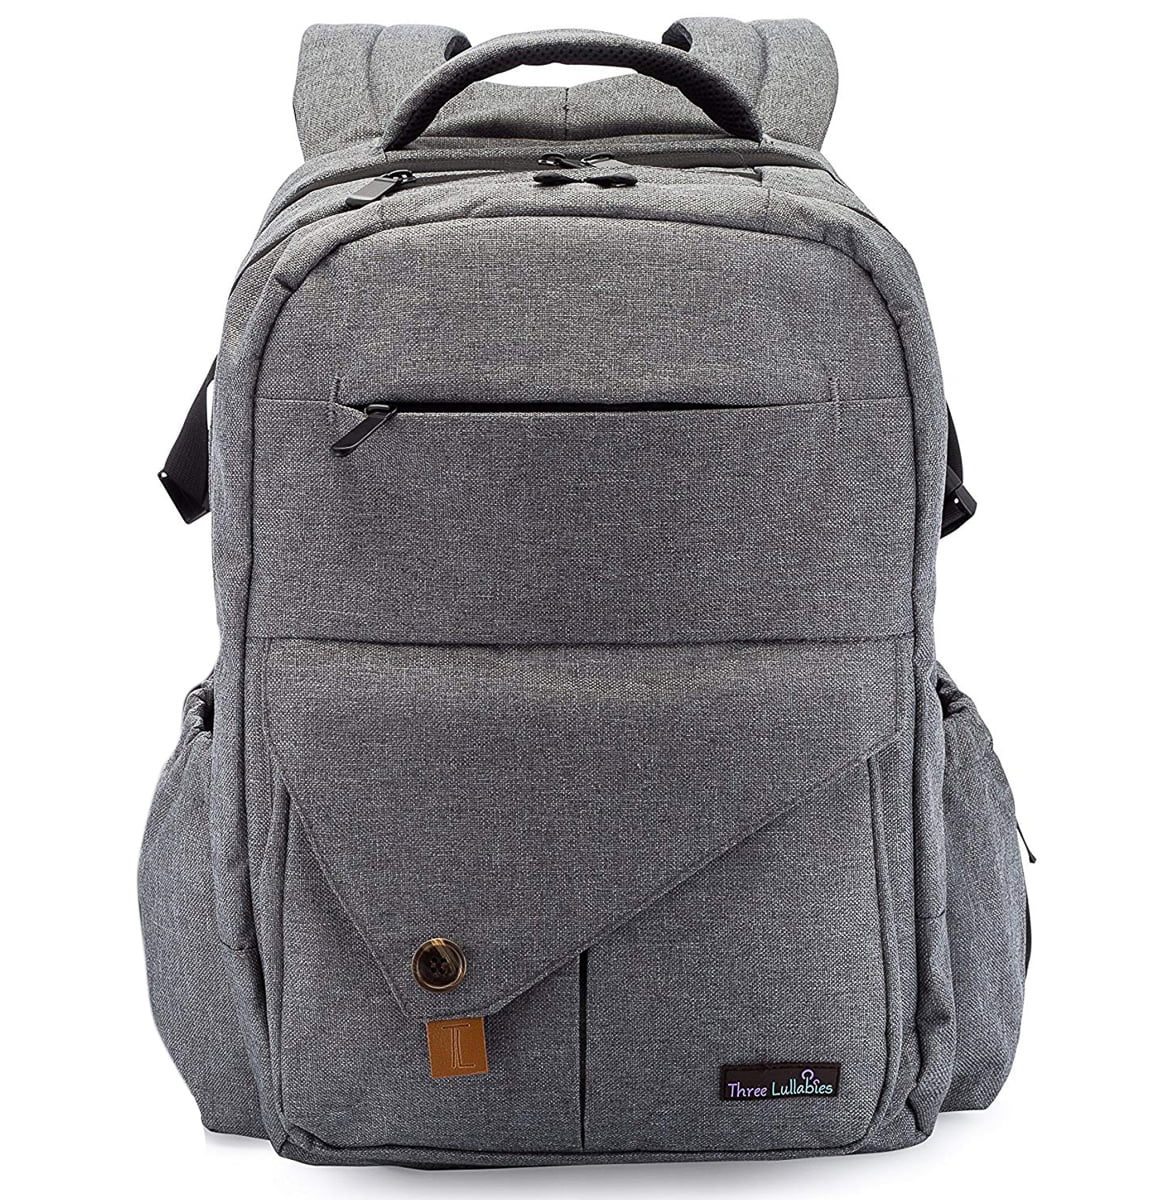 Three Lullabies Waterproof Diaper Bag Backpack Travel Organizer Anti-Theft Backpack Durable ...